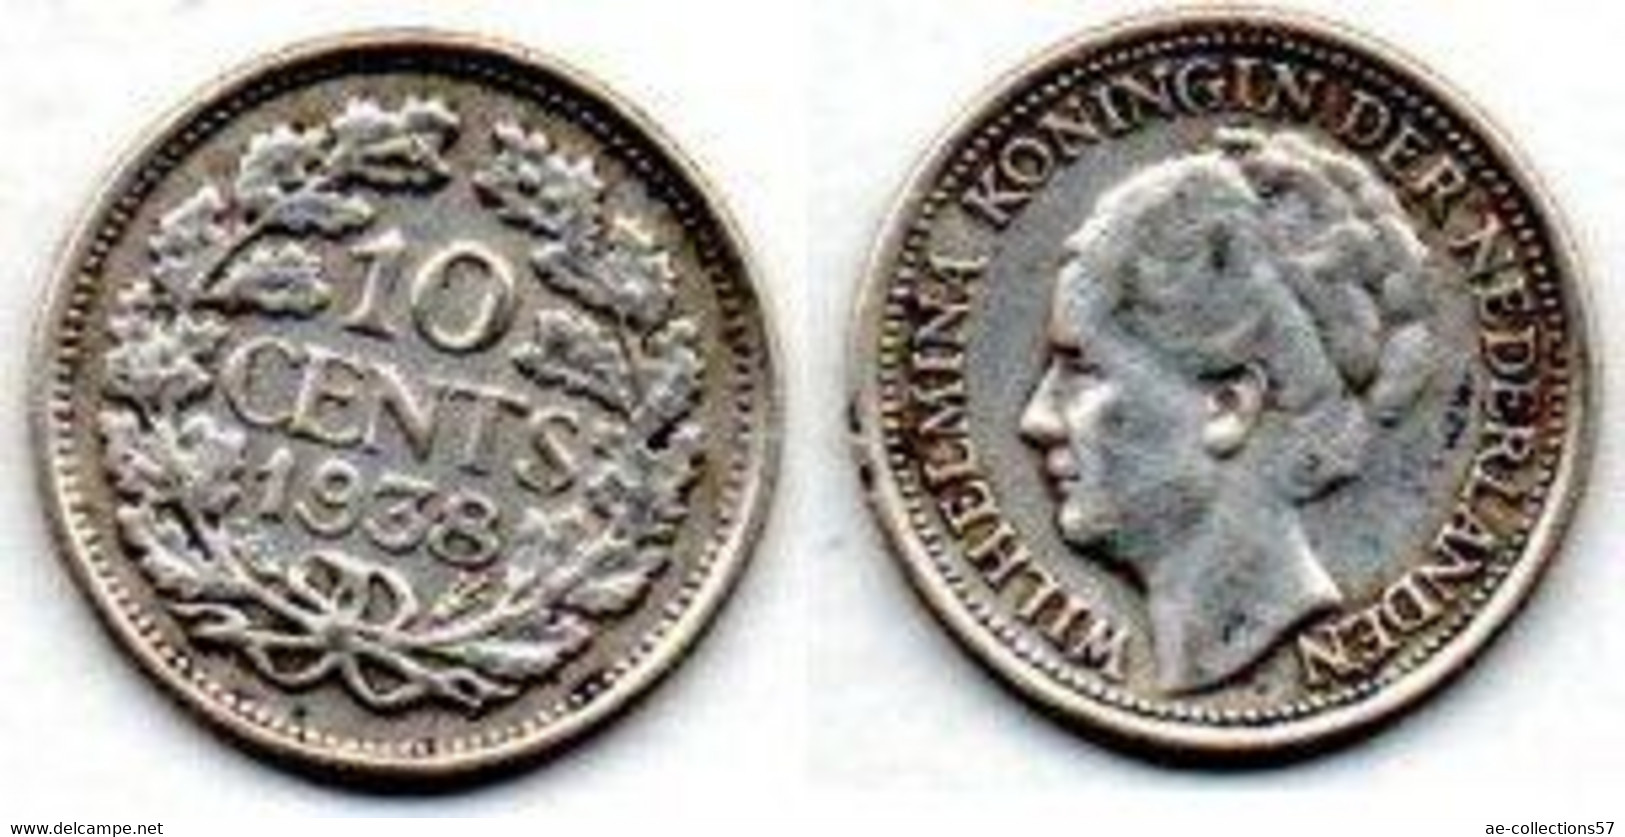 Pays Bas - Netherlands - Niederlande  10 Cents 1938 TTB - 10 Cent